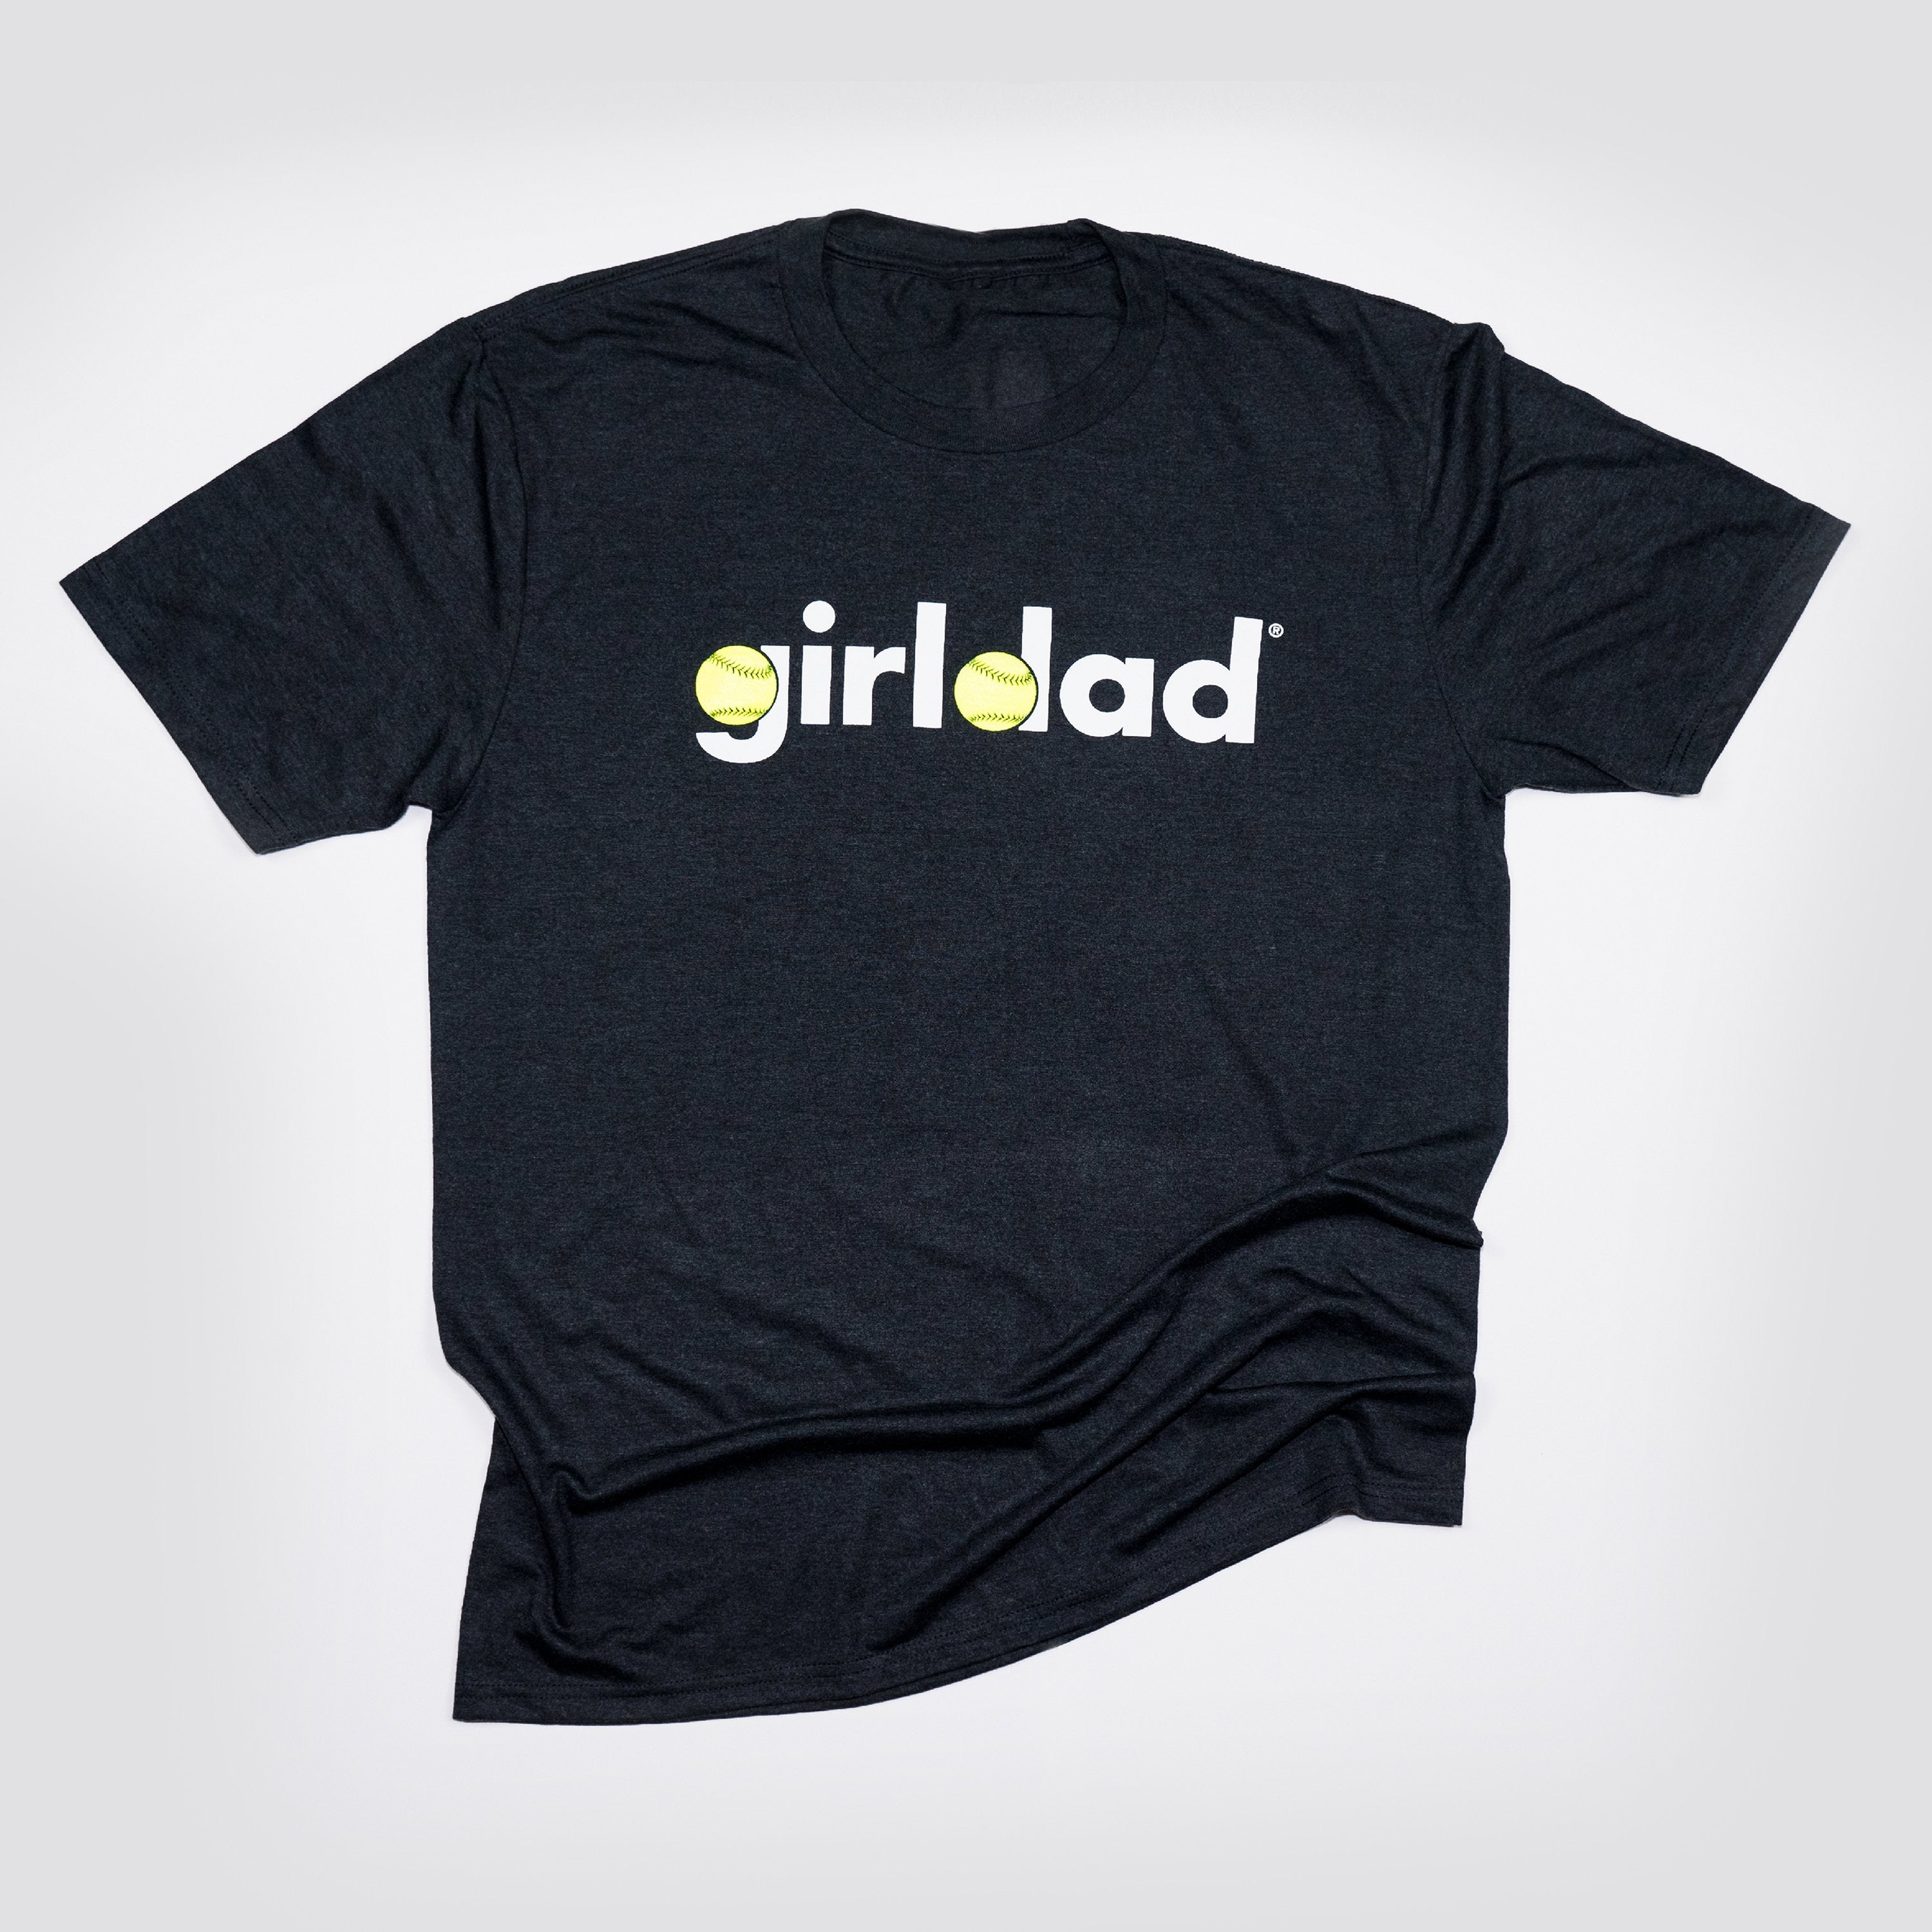 Girldad®  Batter Up! Shirt